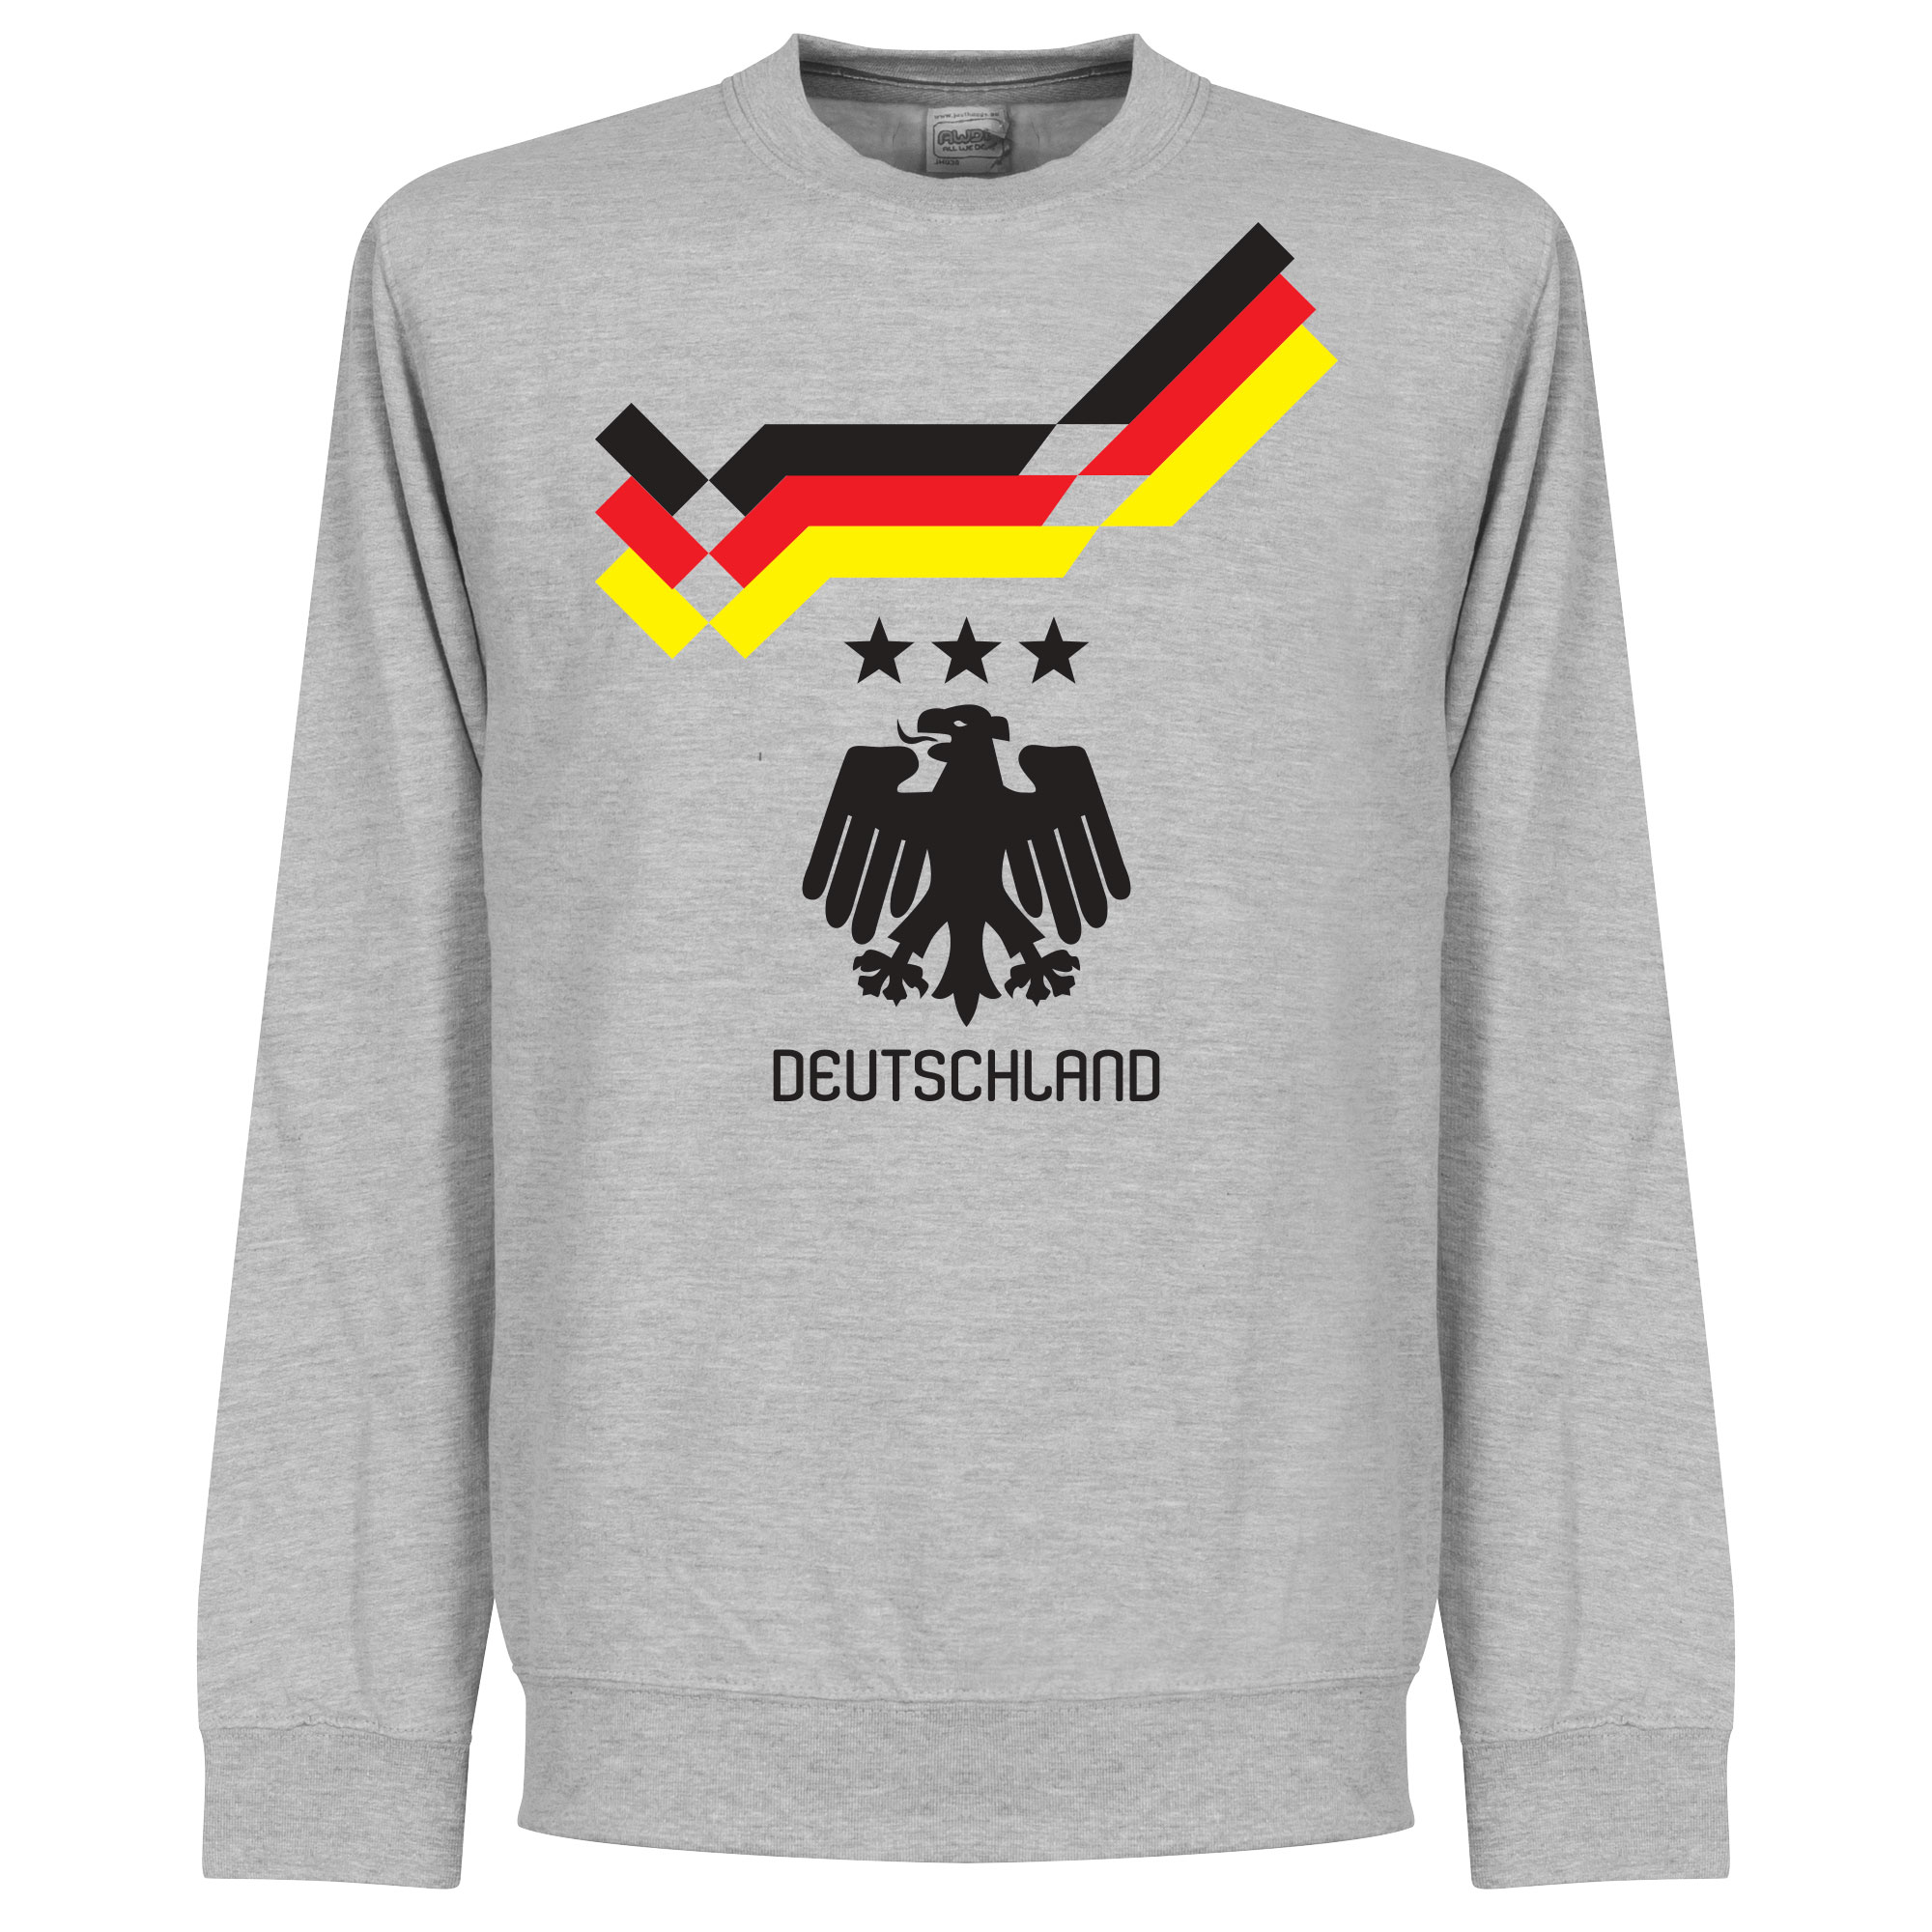 Duitsland 1990 Retro Sweater - XXL